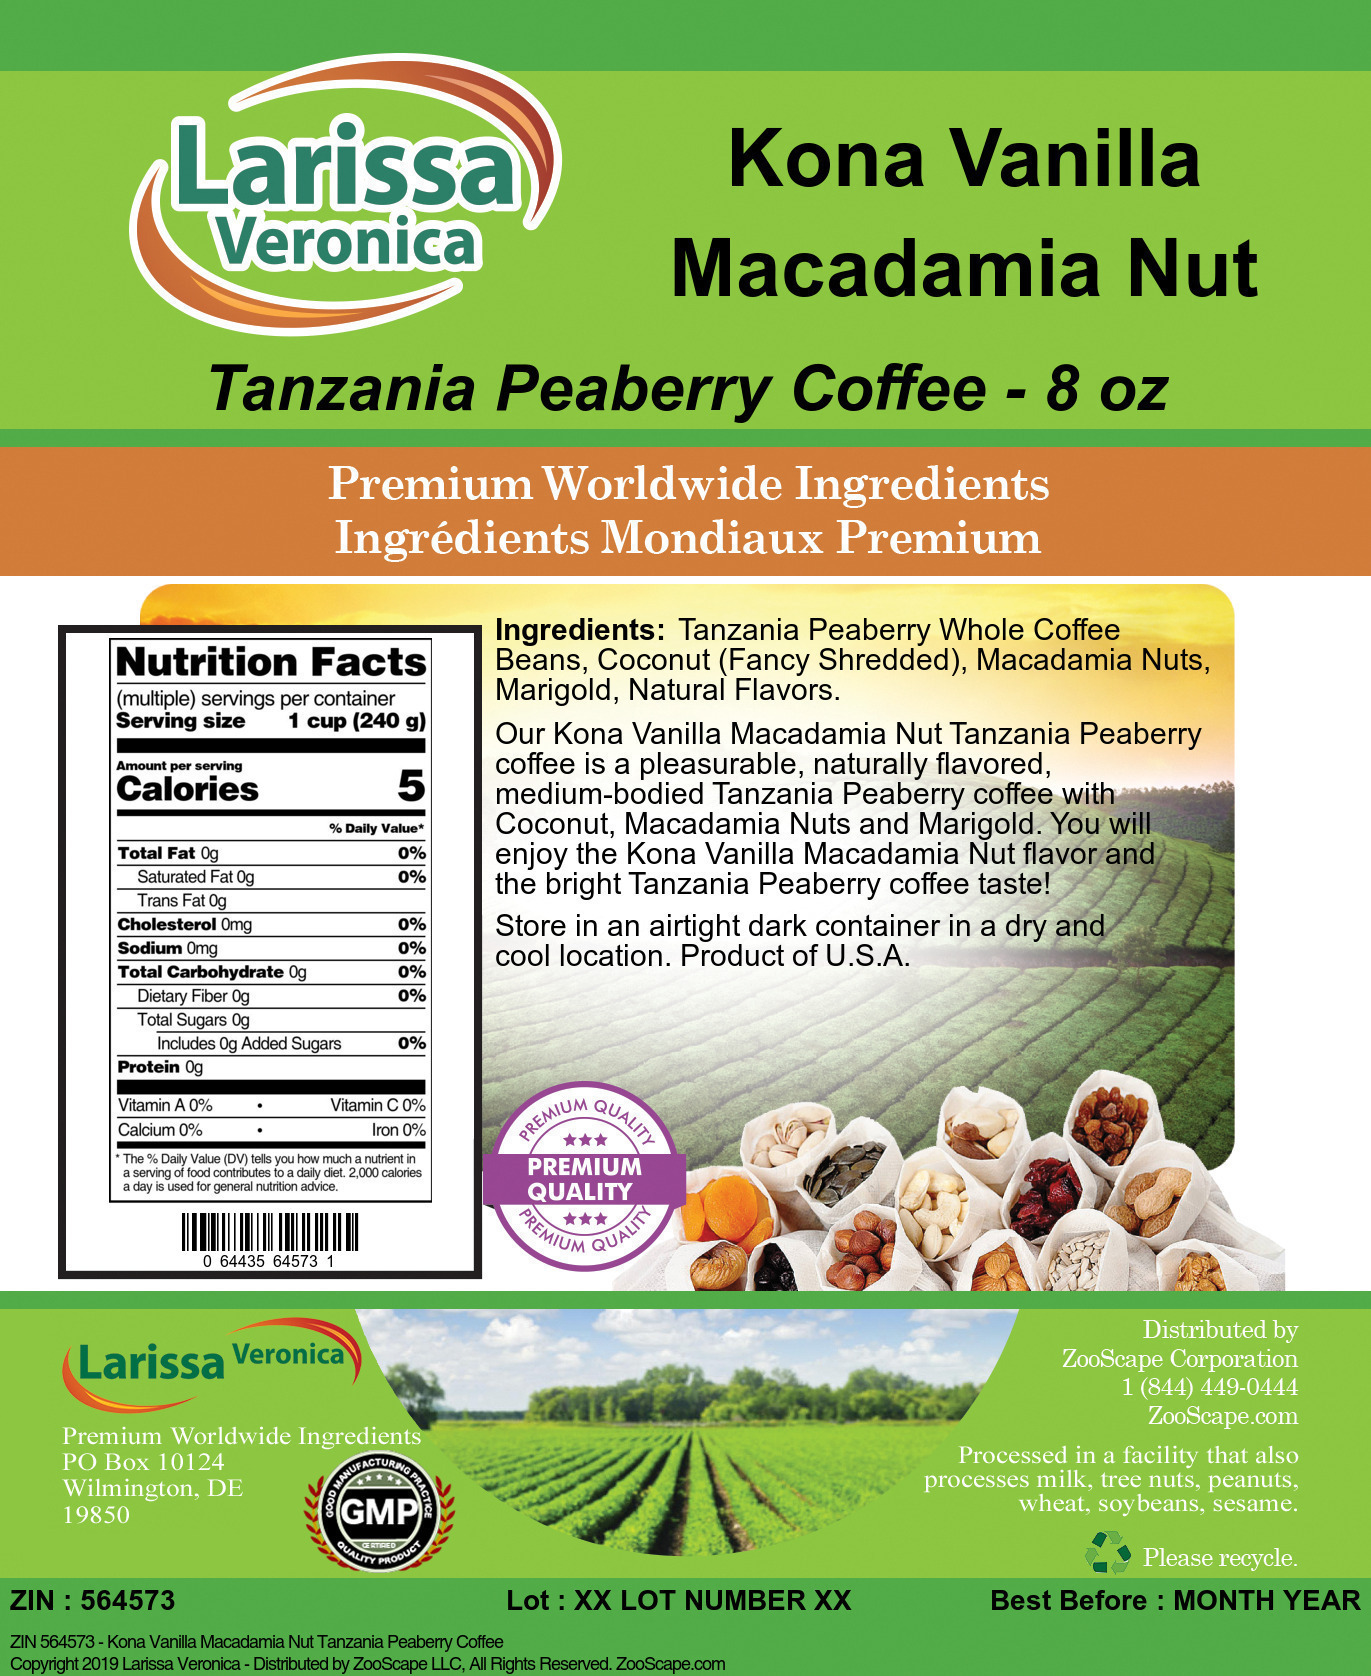 Kona Vanilla Macadamia Nut Tanzania Peaberry Coffee - Label